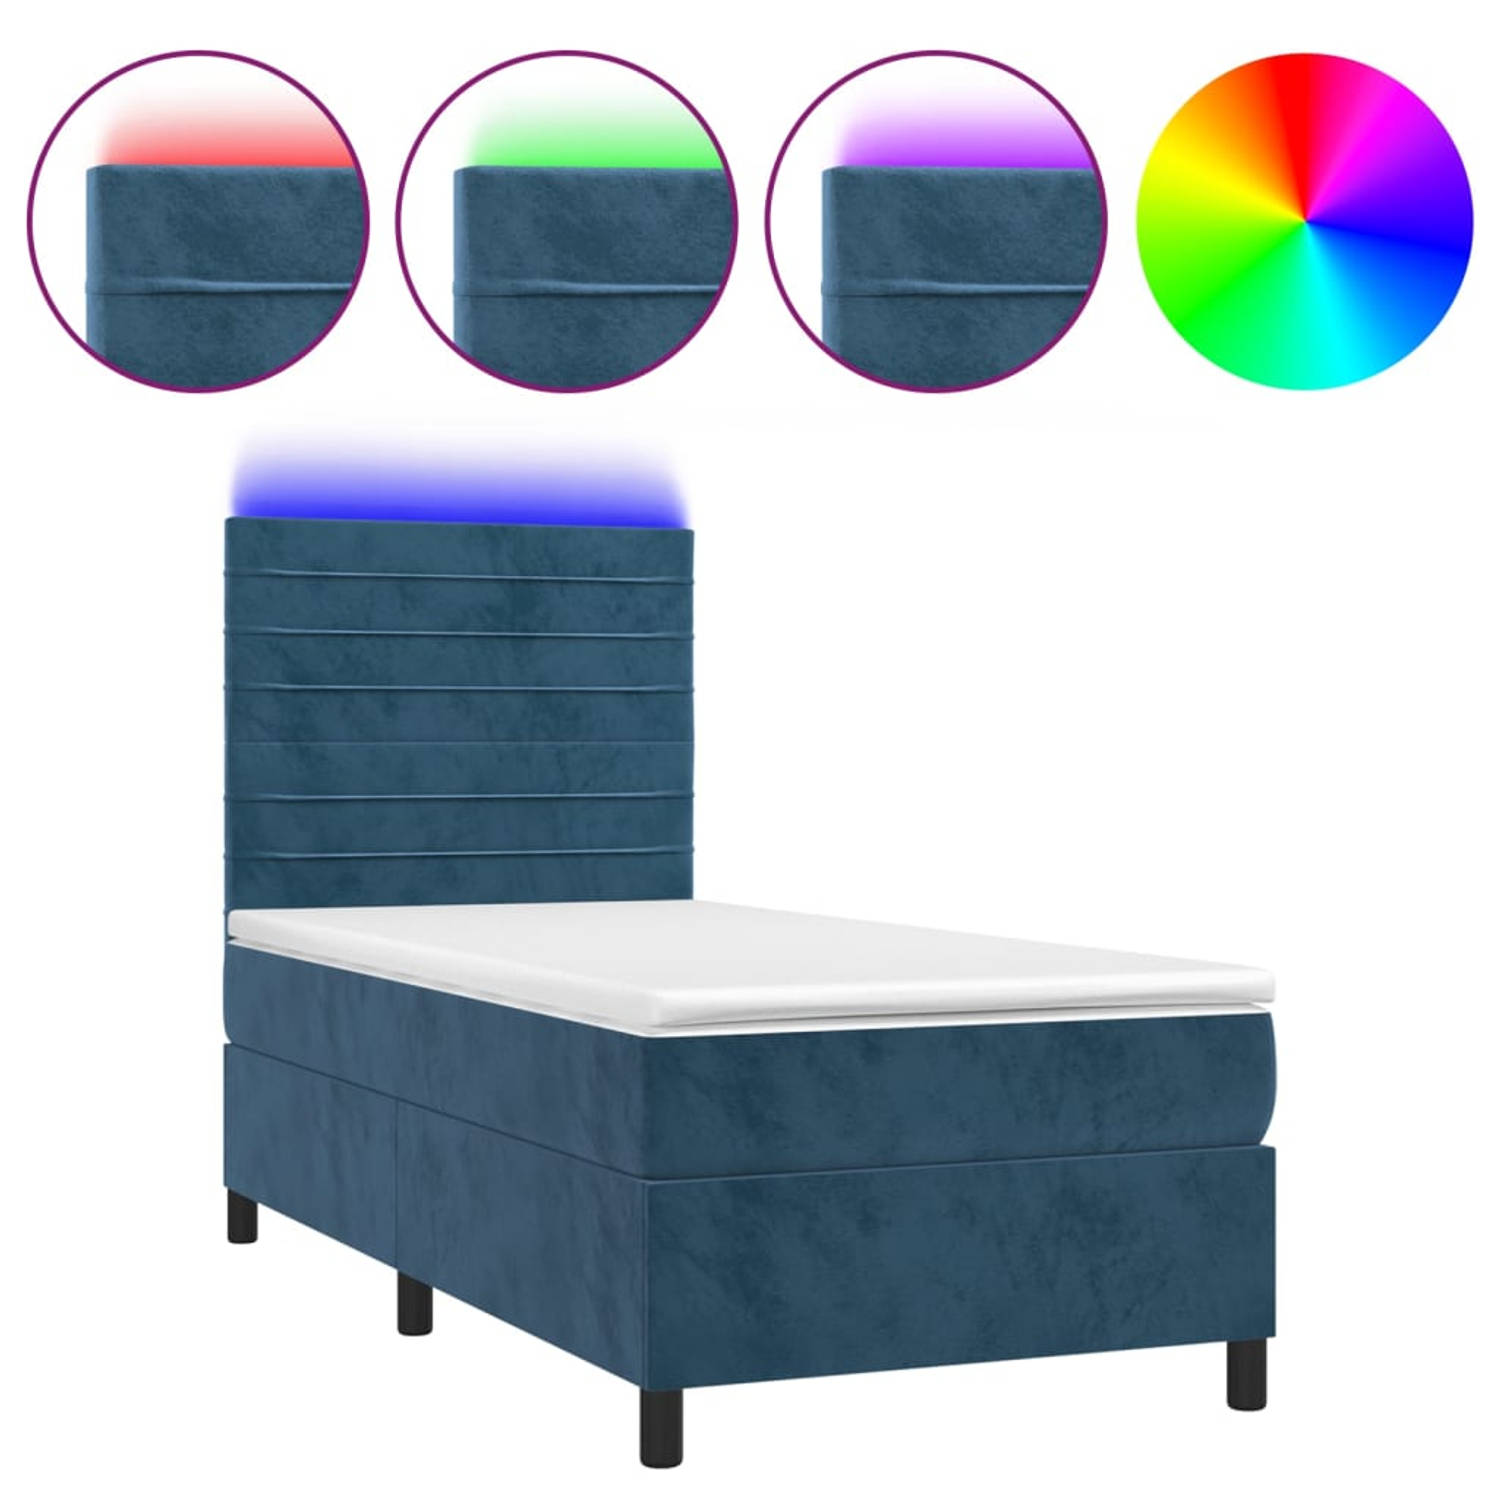 The Living Store Boxspring s Bed - 203x100x118/128 cm - Dark Blue Velvet - Pocket Spring Mattress - Comfortable Top Mattress - Colorful LED Lights